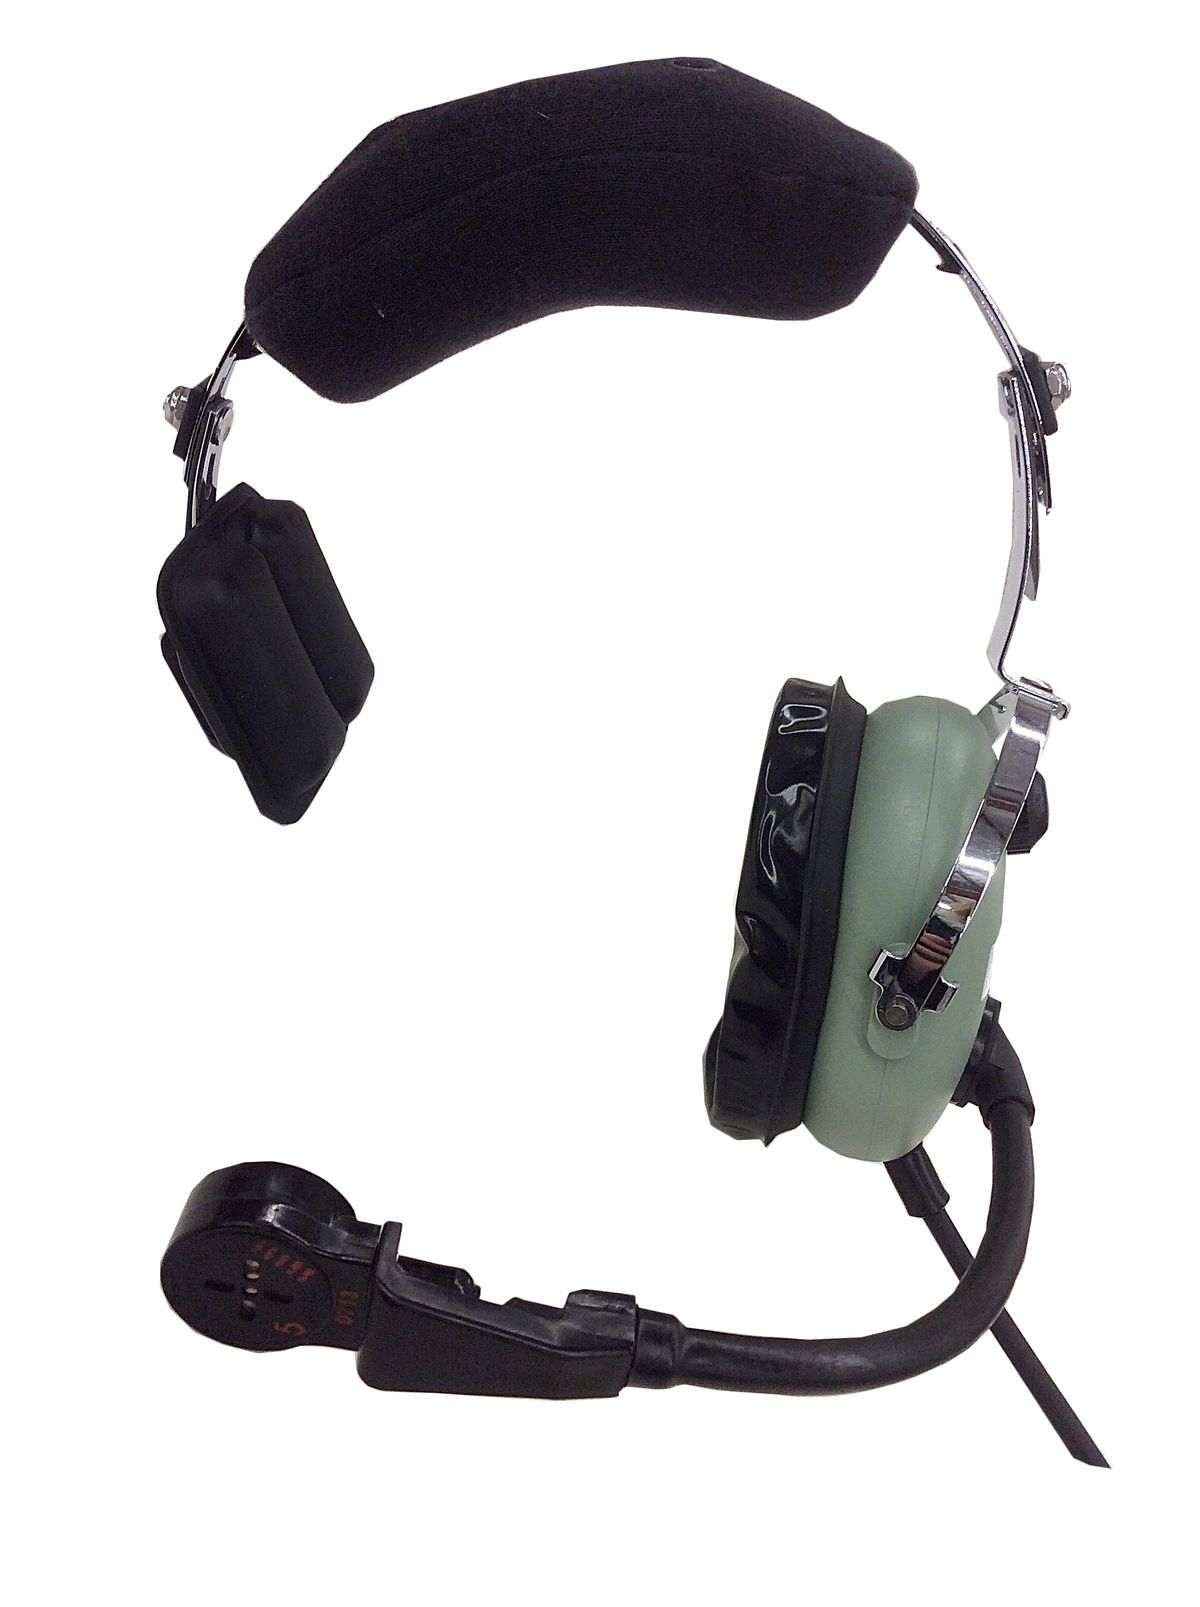 David Clark Company Pro-Audio Single-Ear Headset at Hollywood Sound Systems